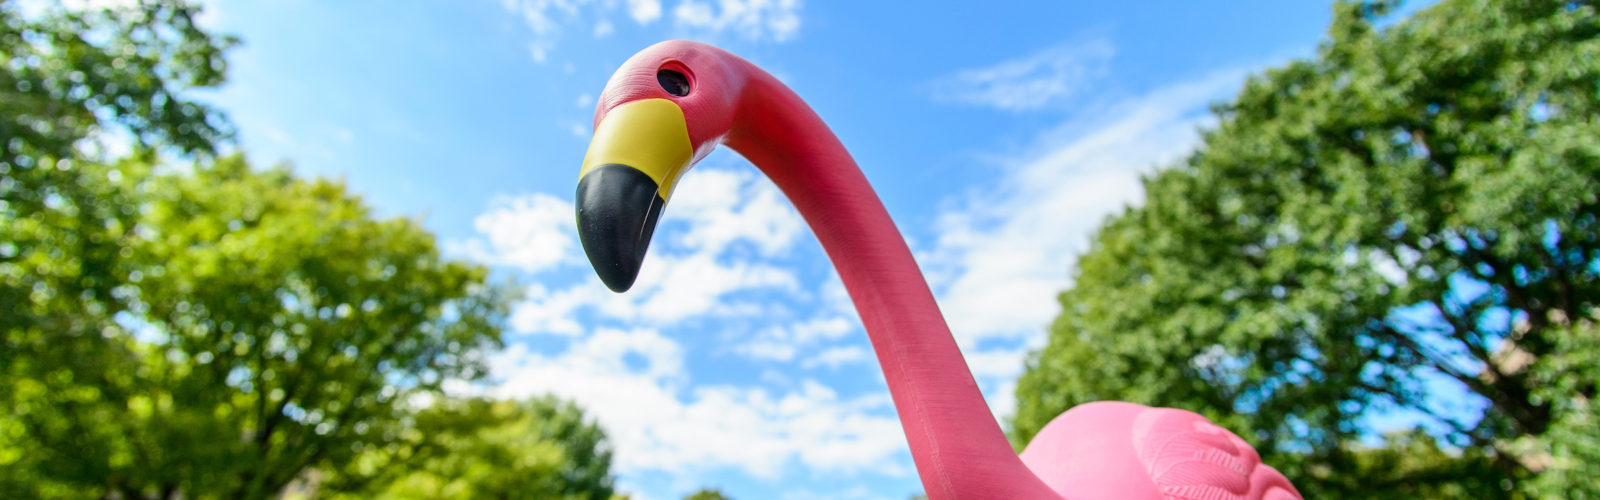 Pink flamingo in front of bascom